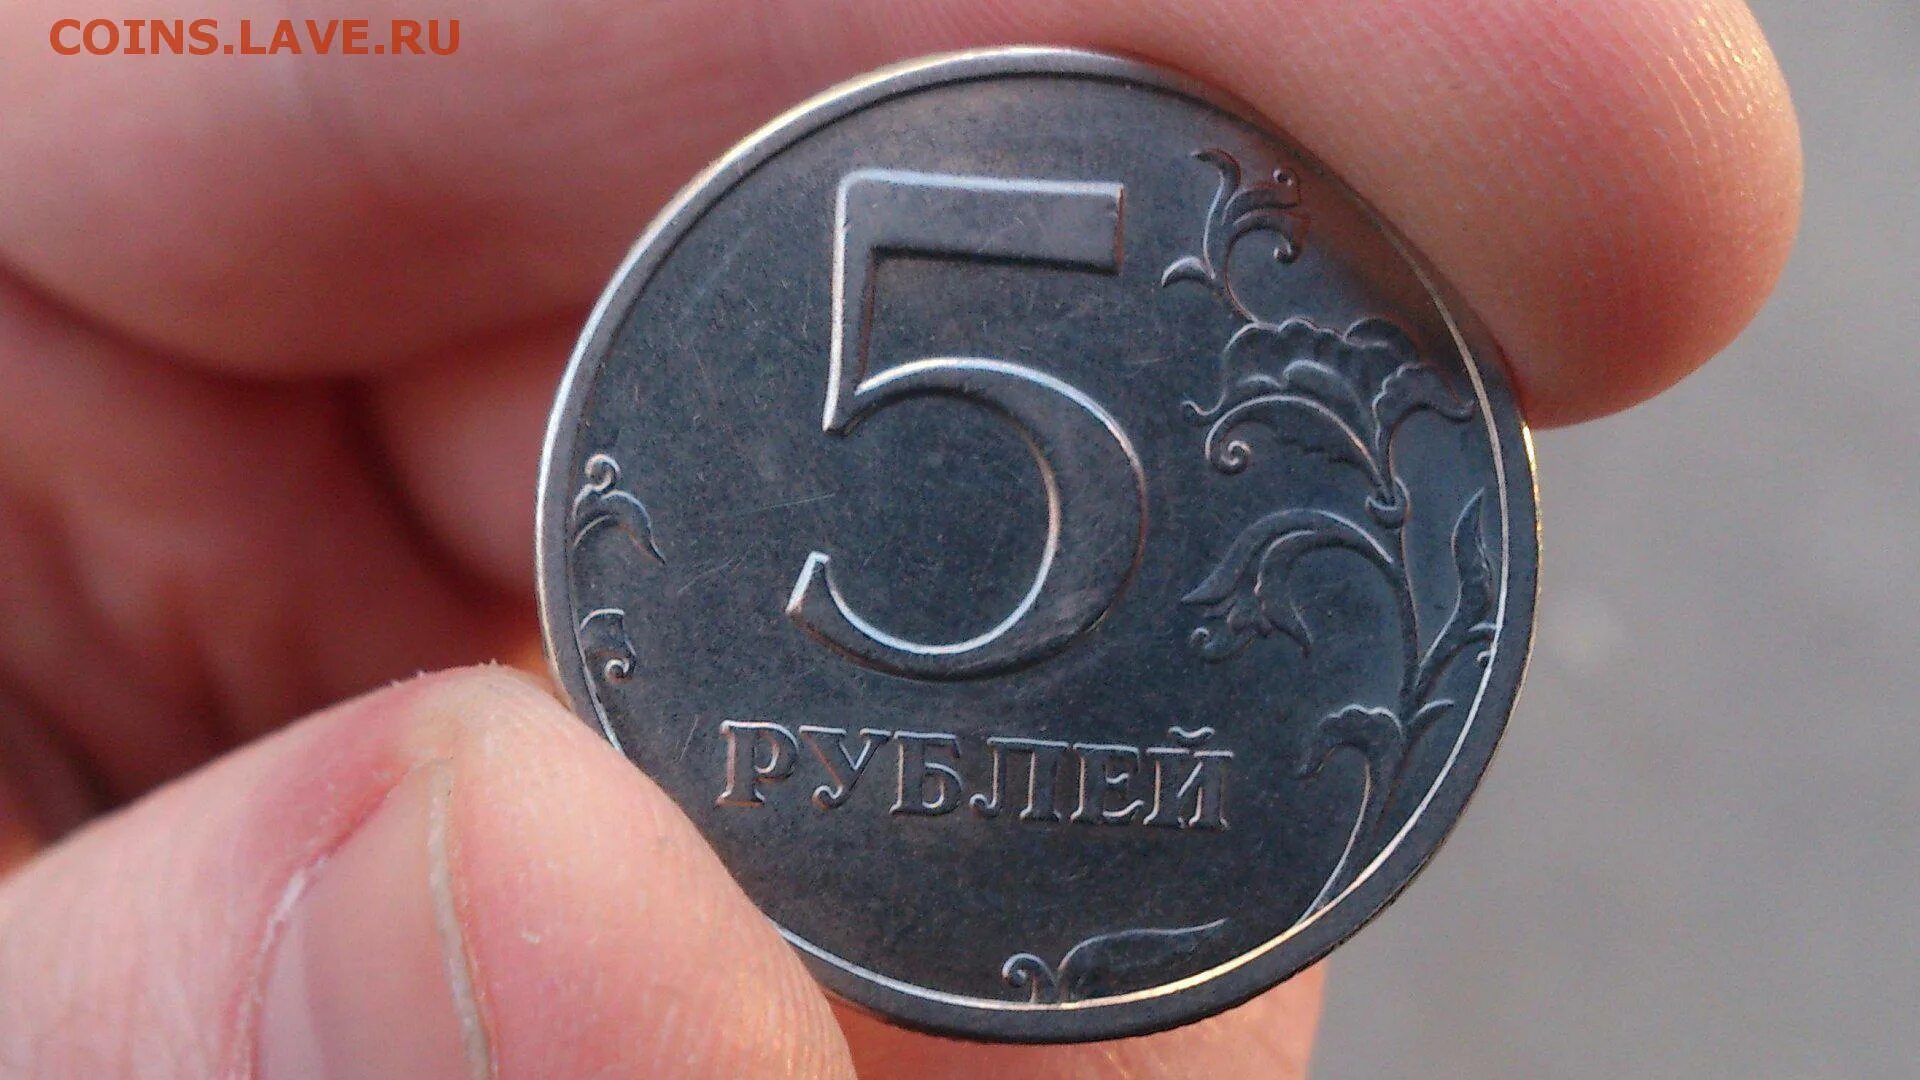 Монеты. Монеты рубли. Монета 5 рублей в руке. Монетка 5 рублей.